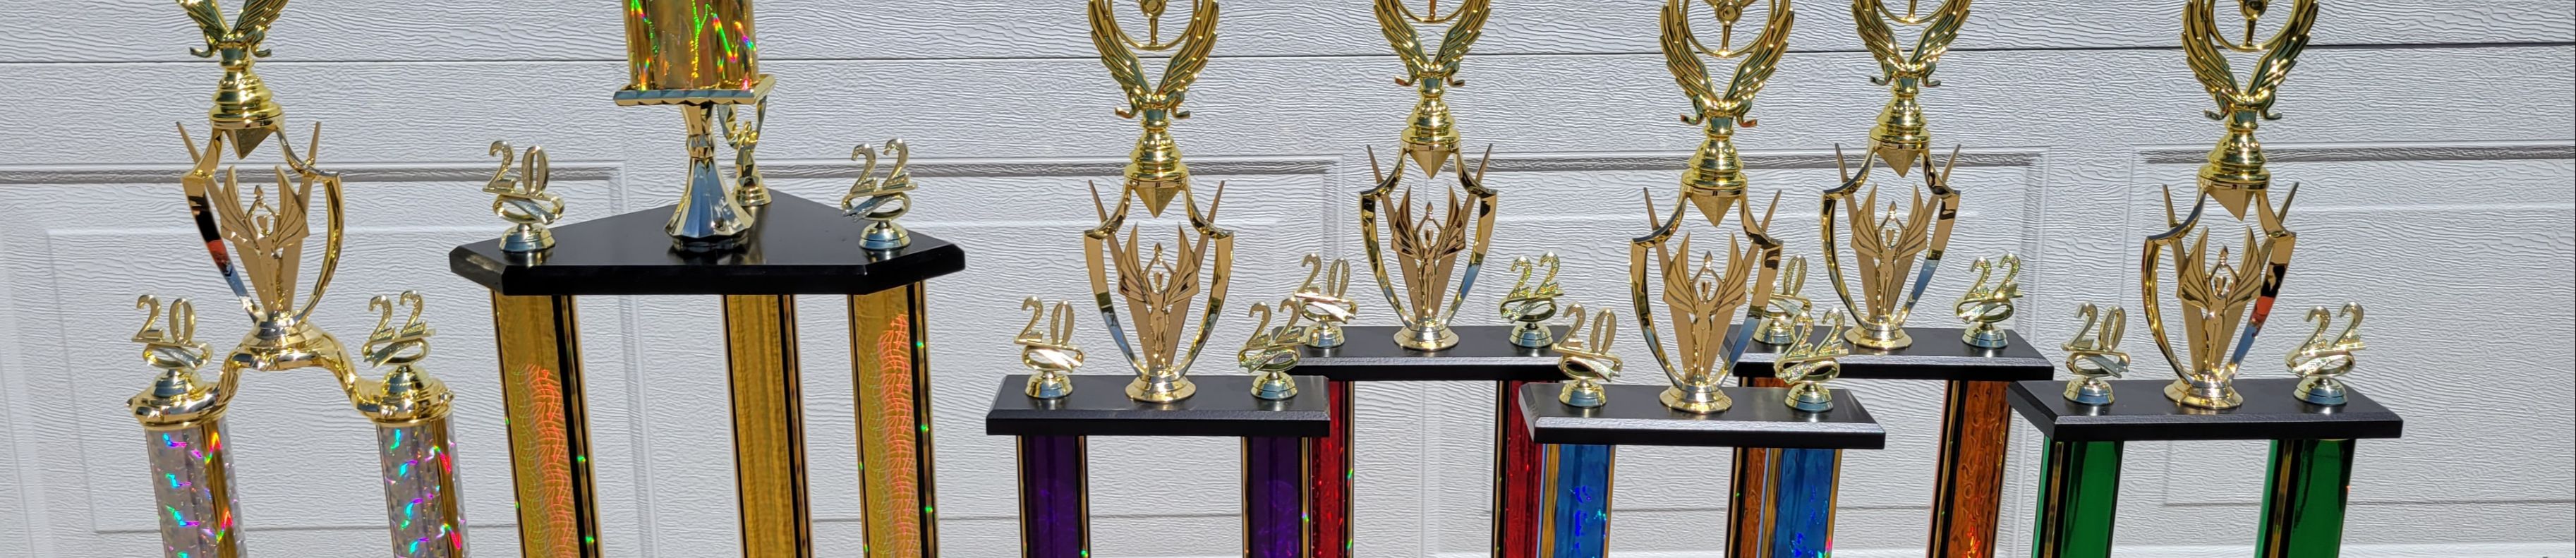 36 Trophy & Dispaly Cases ideas  trophy display, award display, trophy